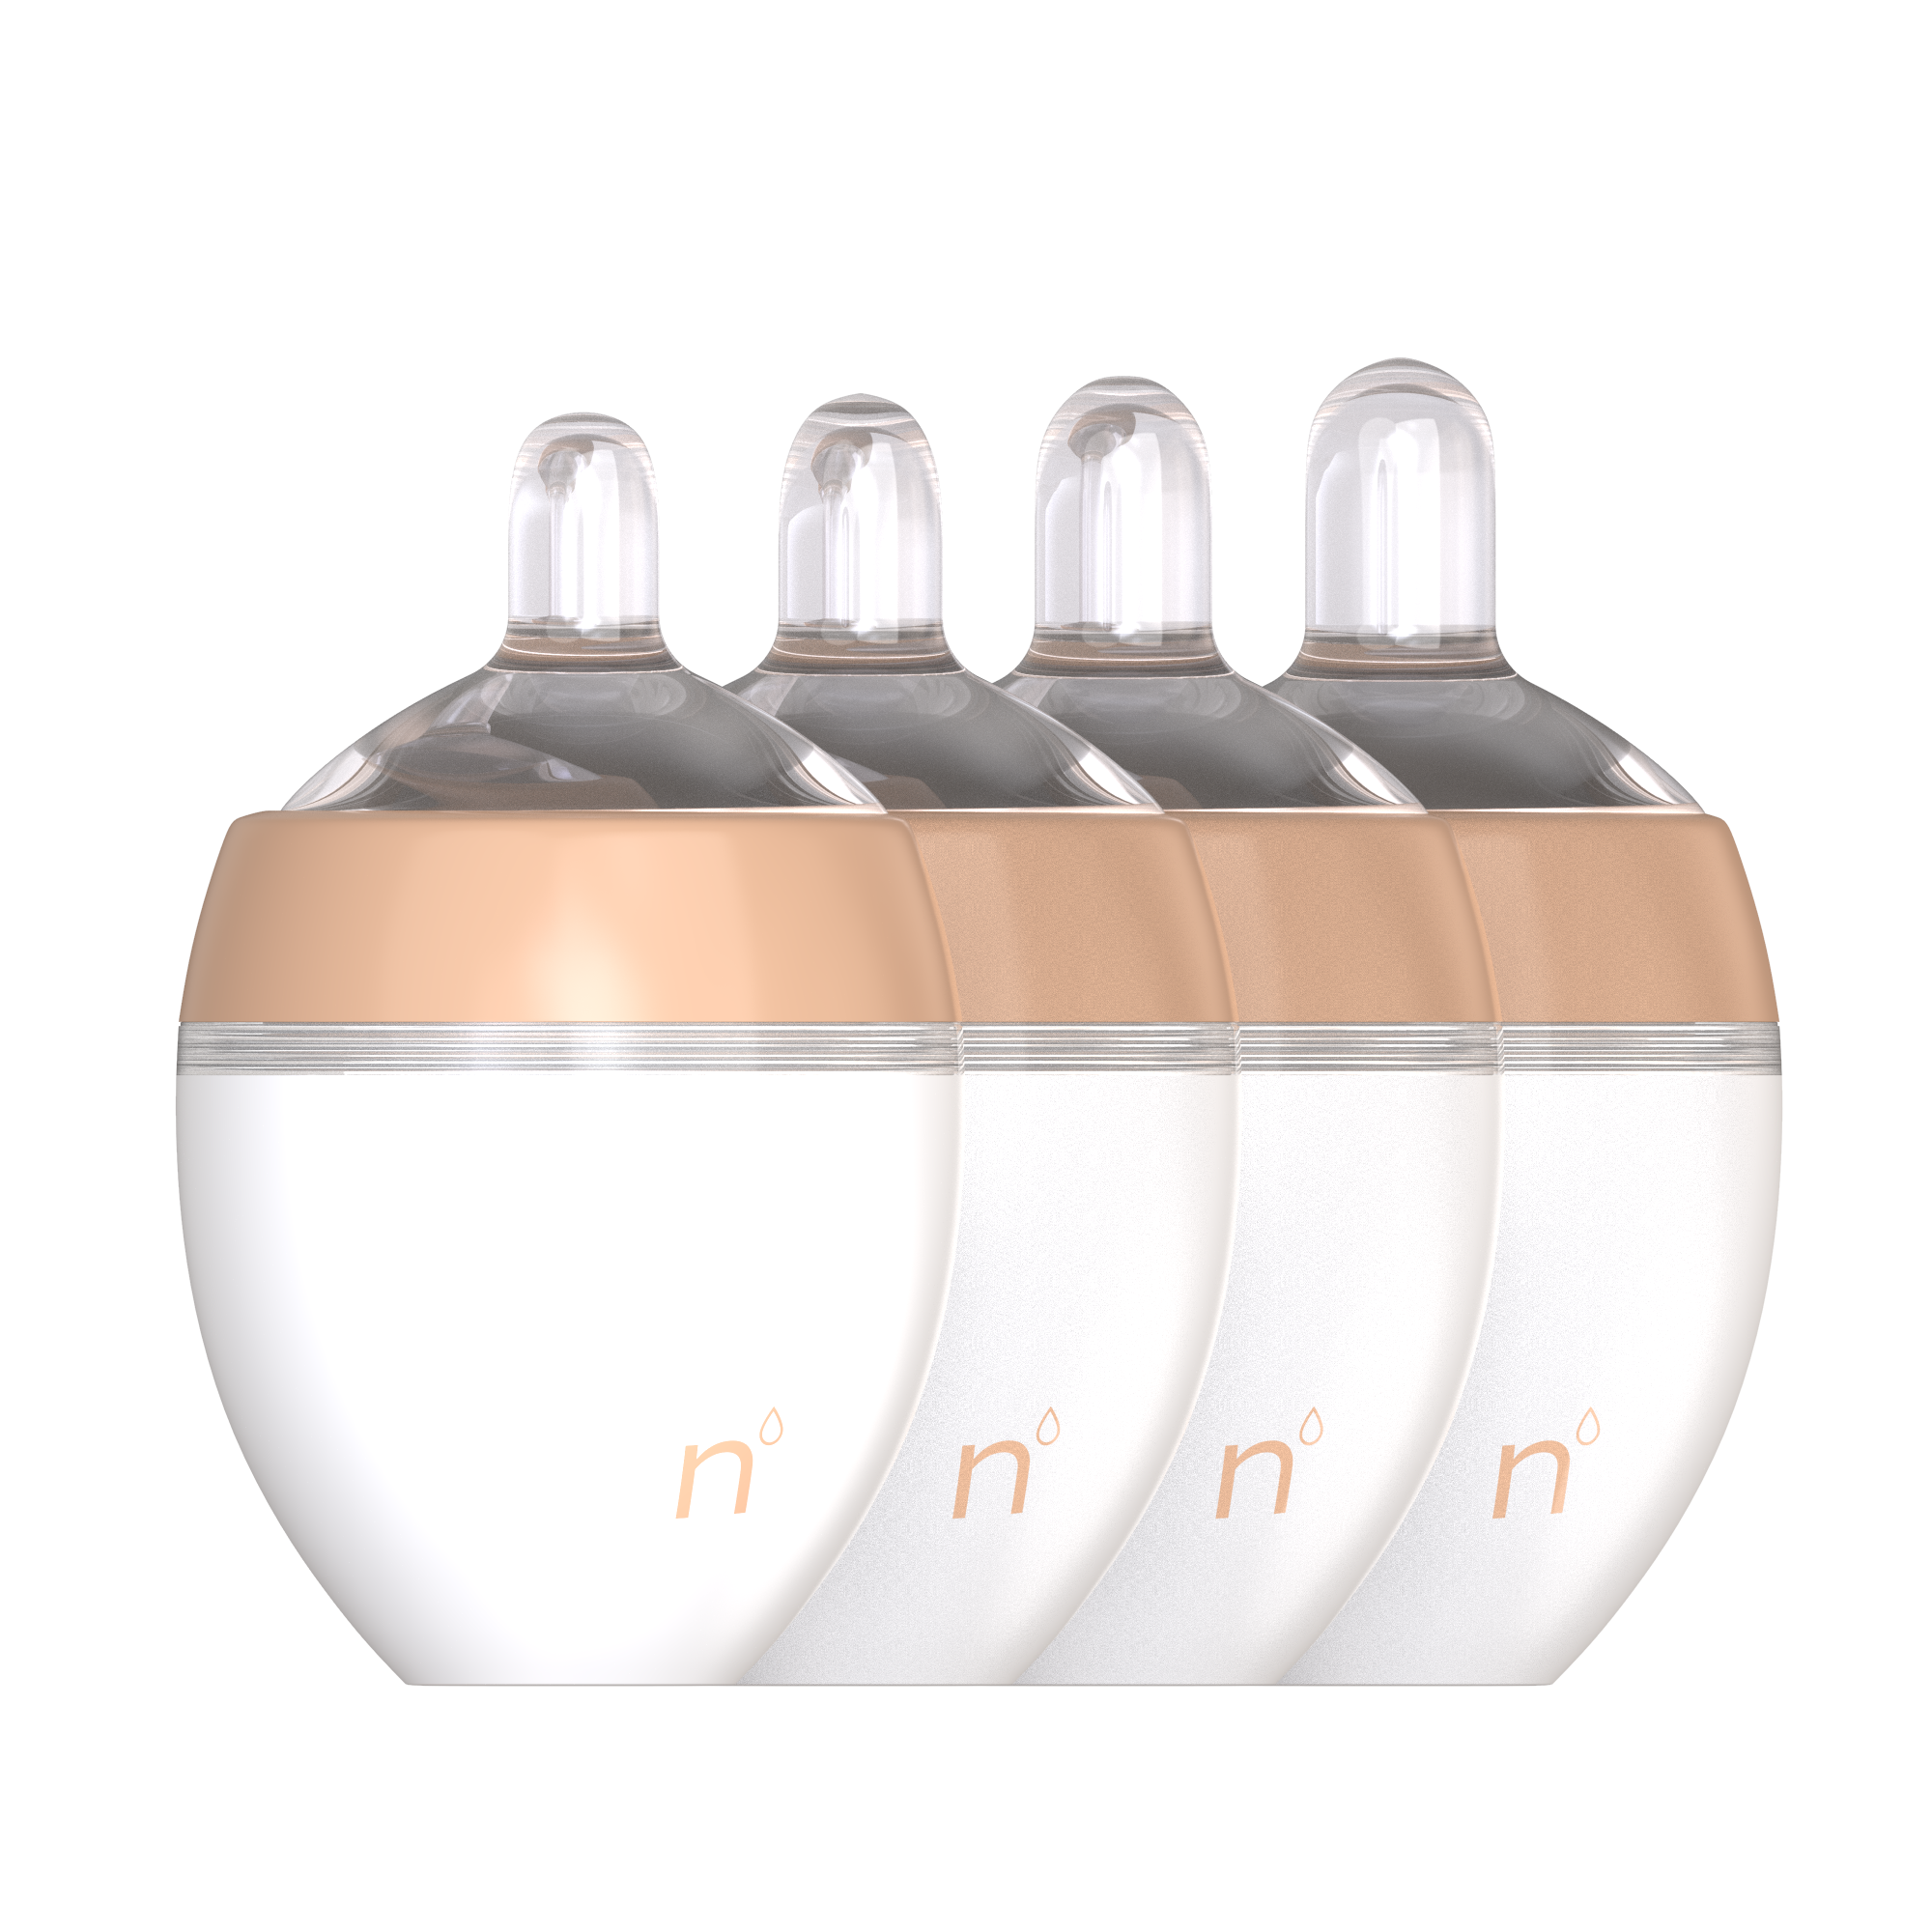 Prototypes of The Natural Nipple's namesake baby bottles. Courtesy photo.